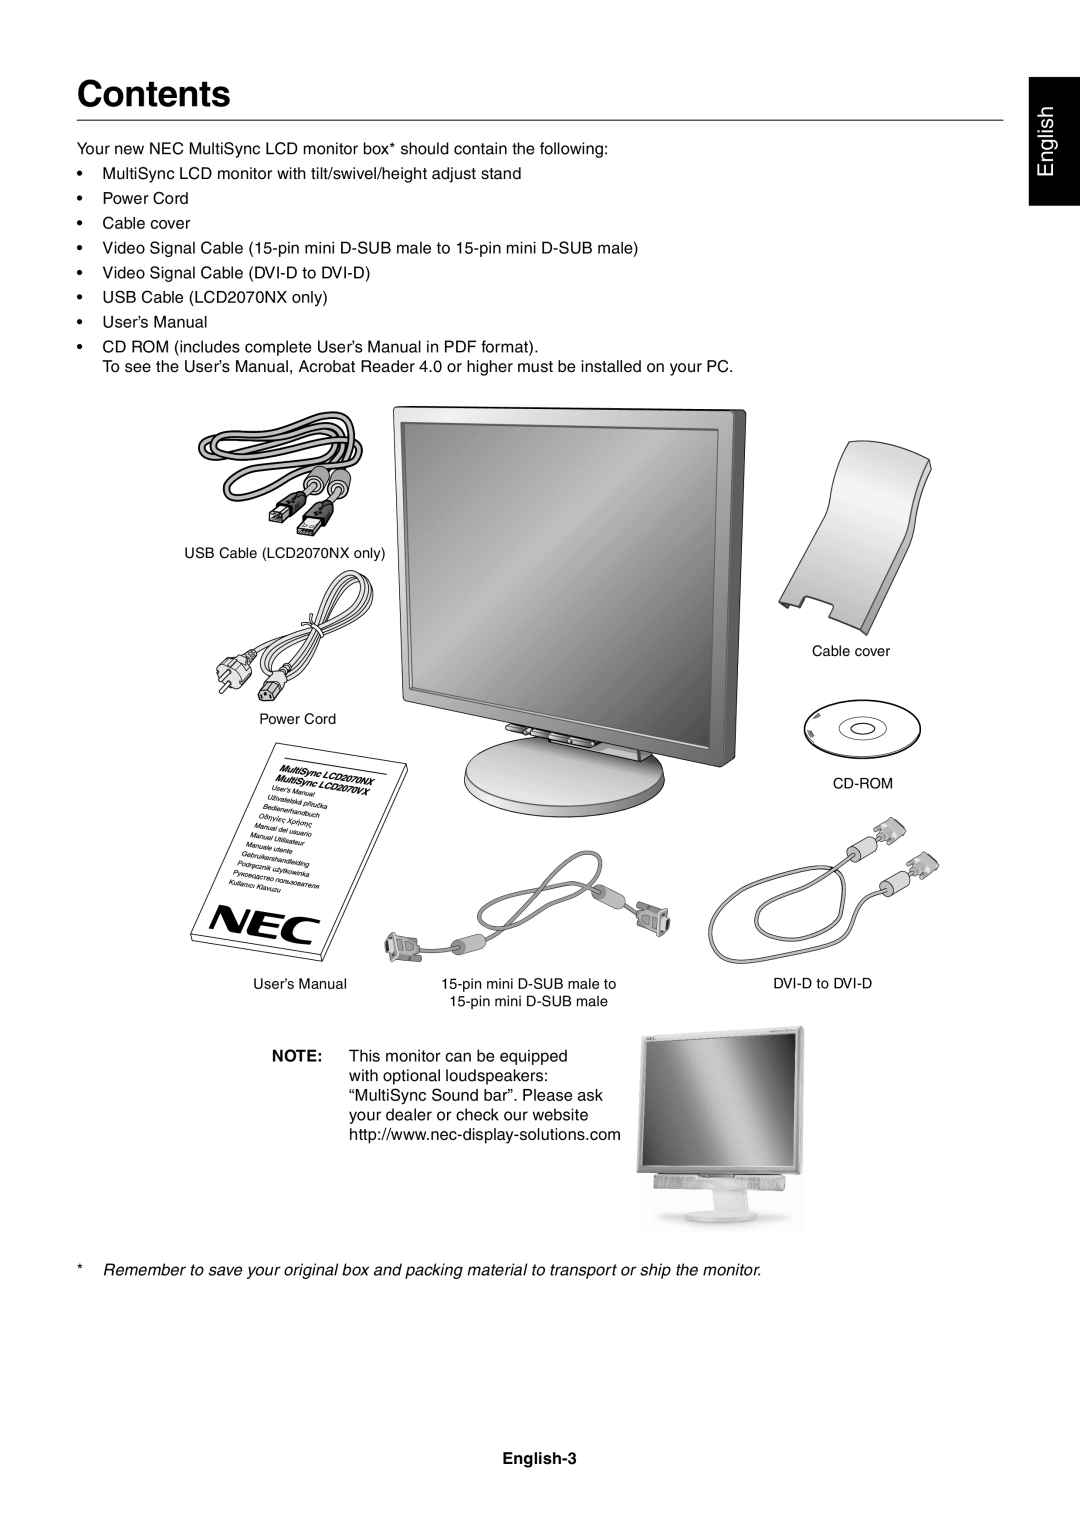 NEC LCD2070NX user manual Contents, English-3 